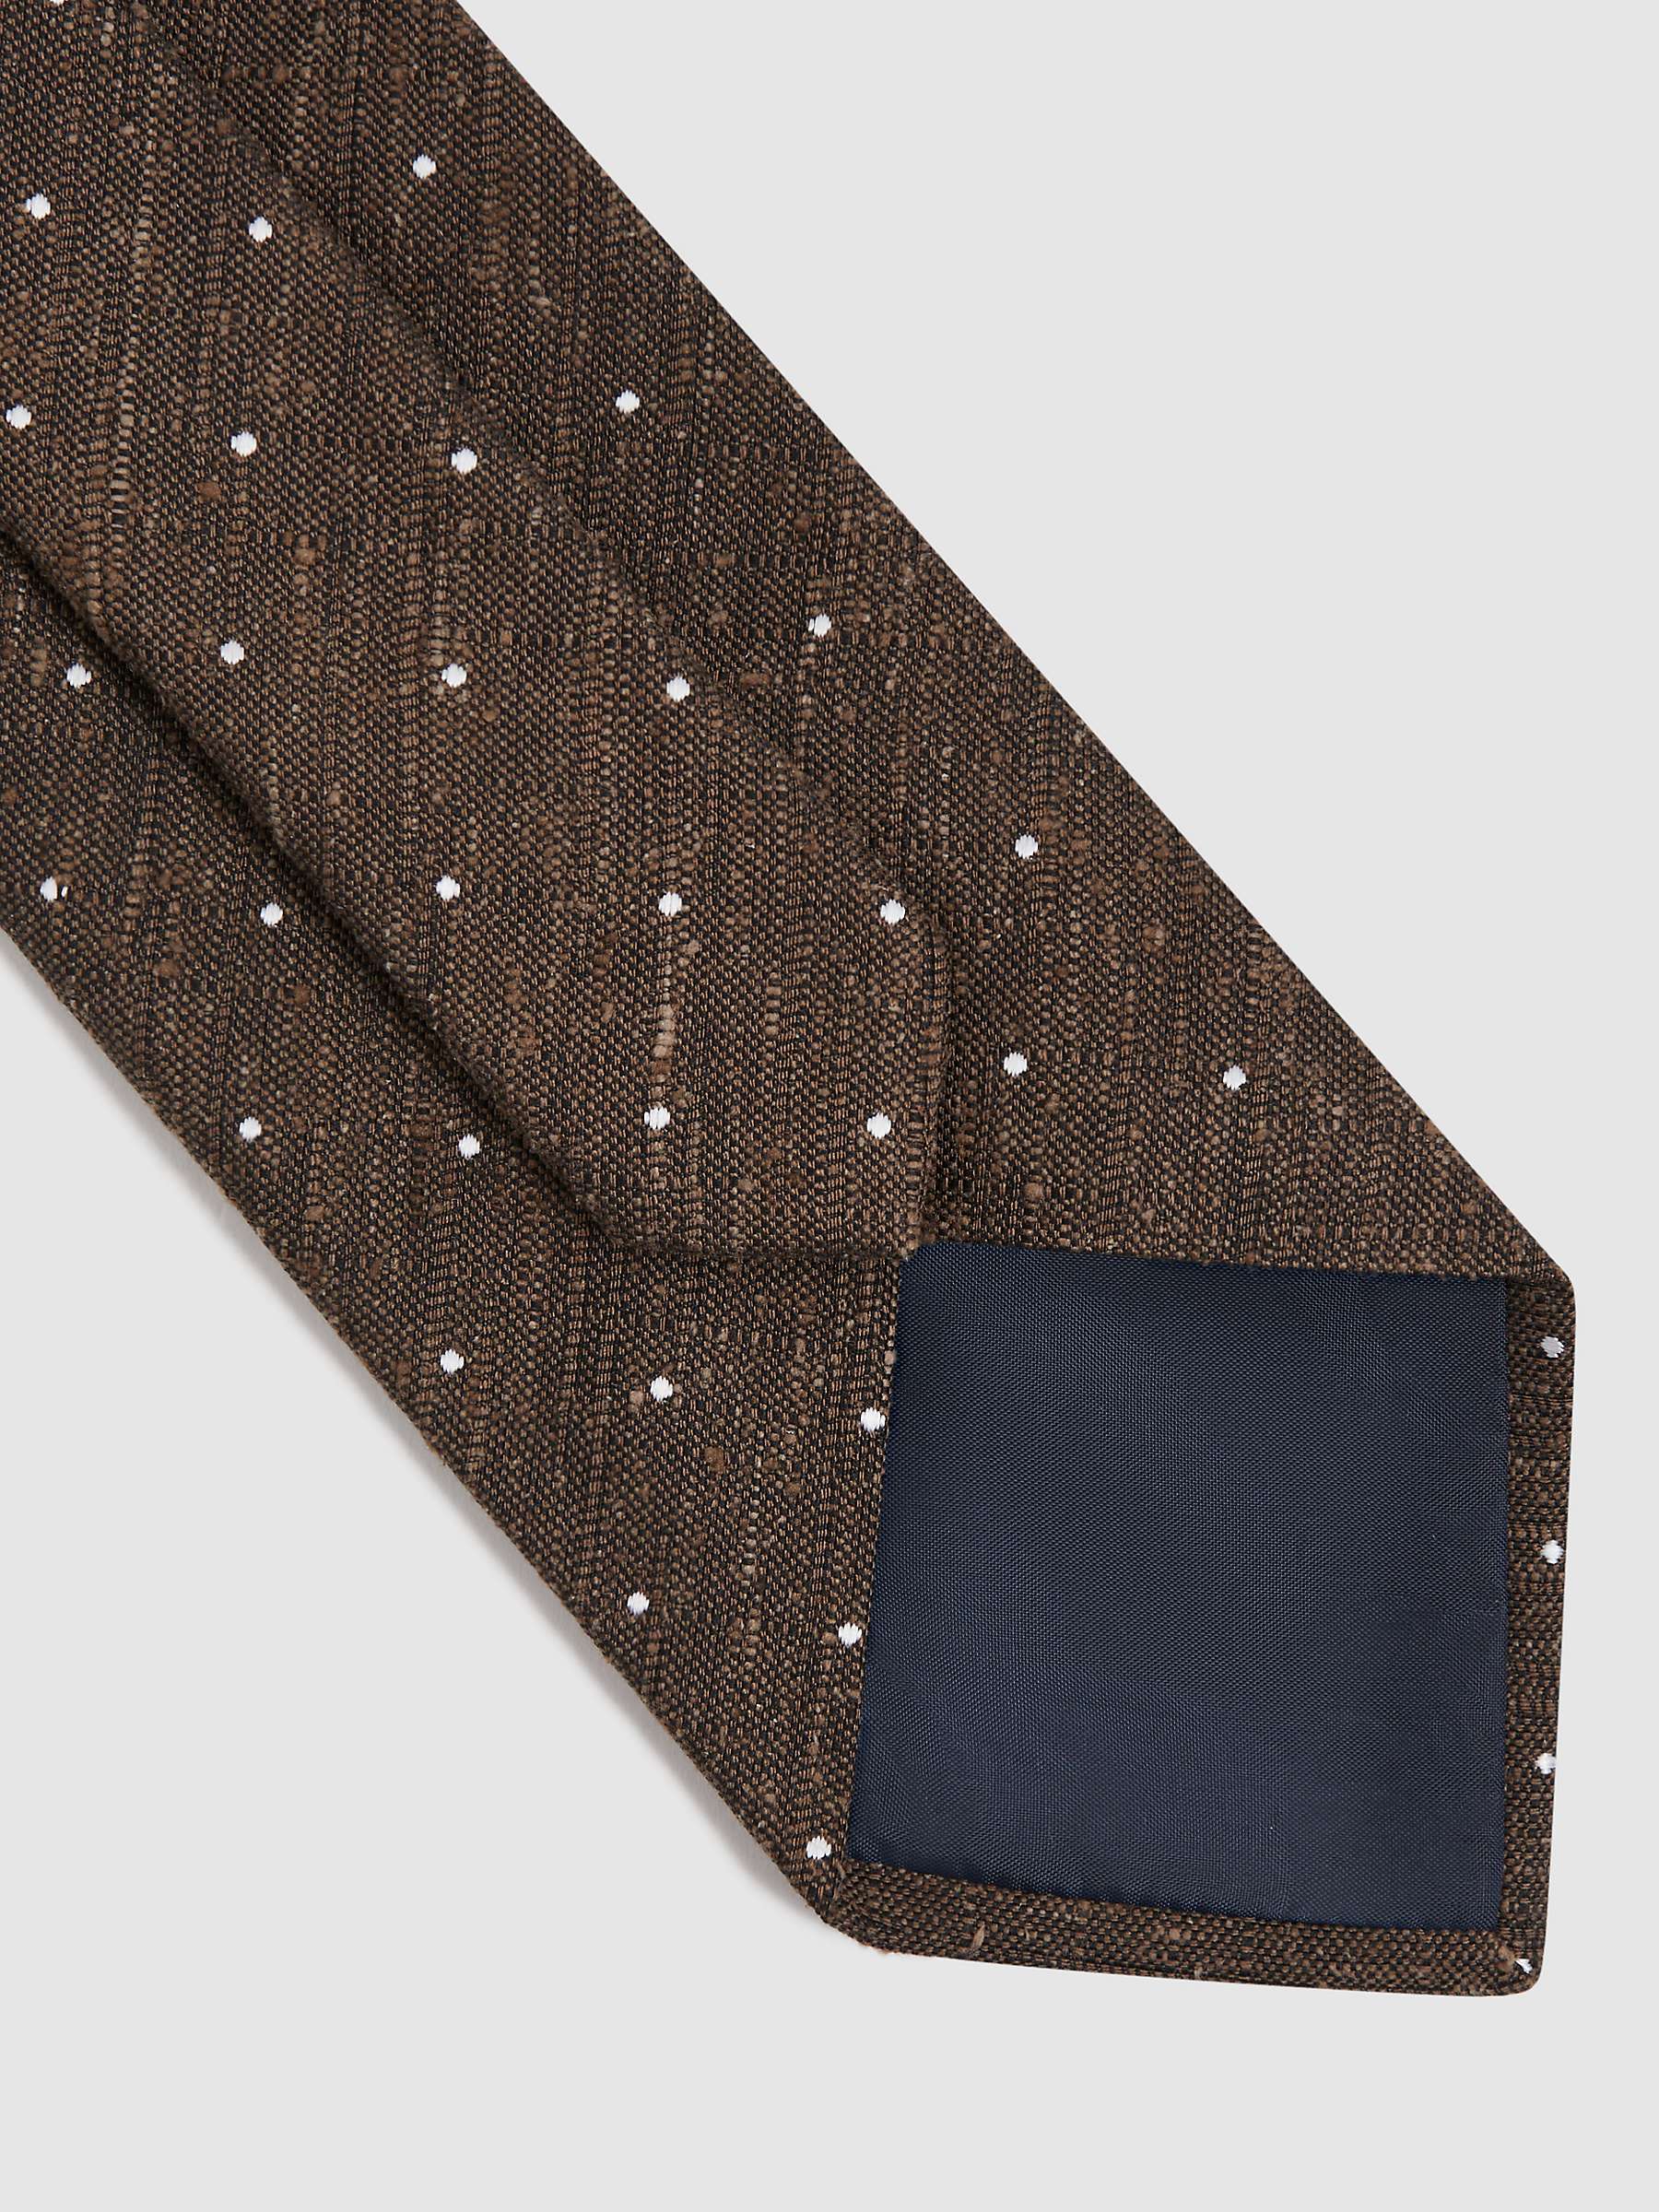 Buy Reiss Lorenzo Pin Dot Textured Silk Blend Tie Online at johnlewis.com